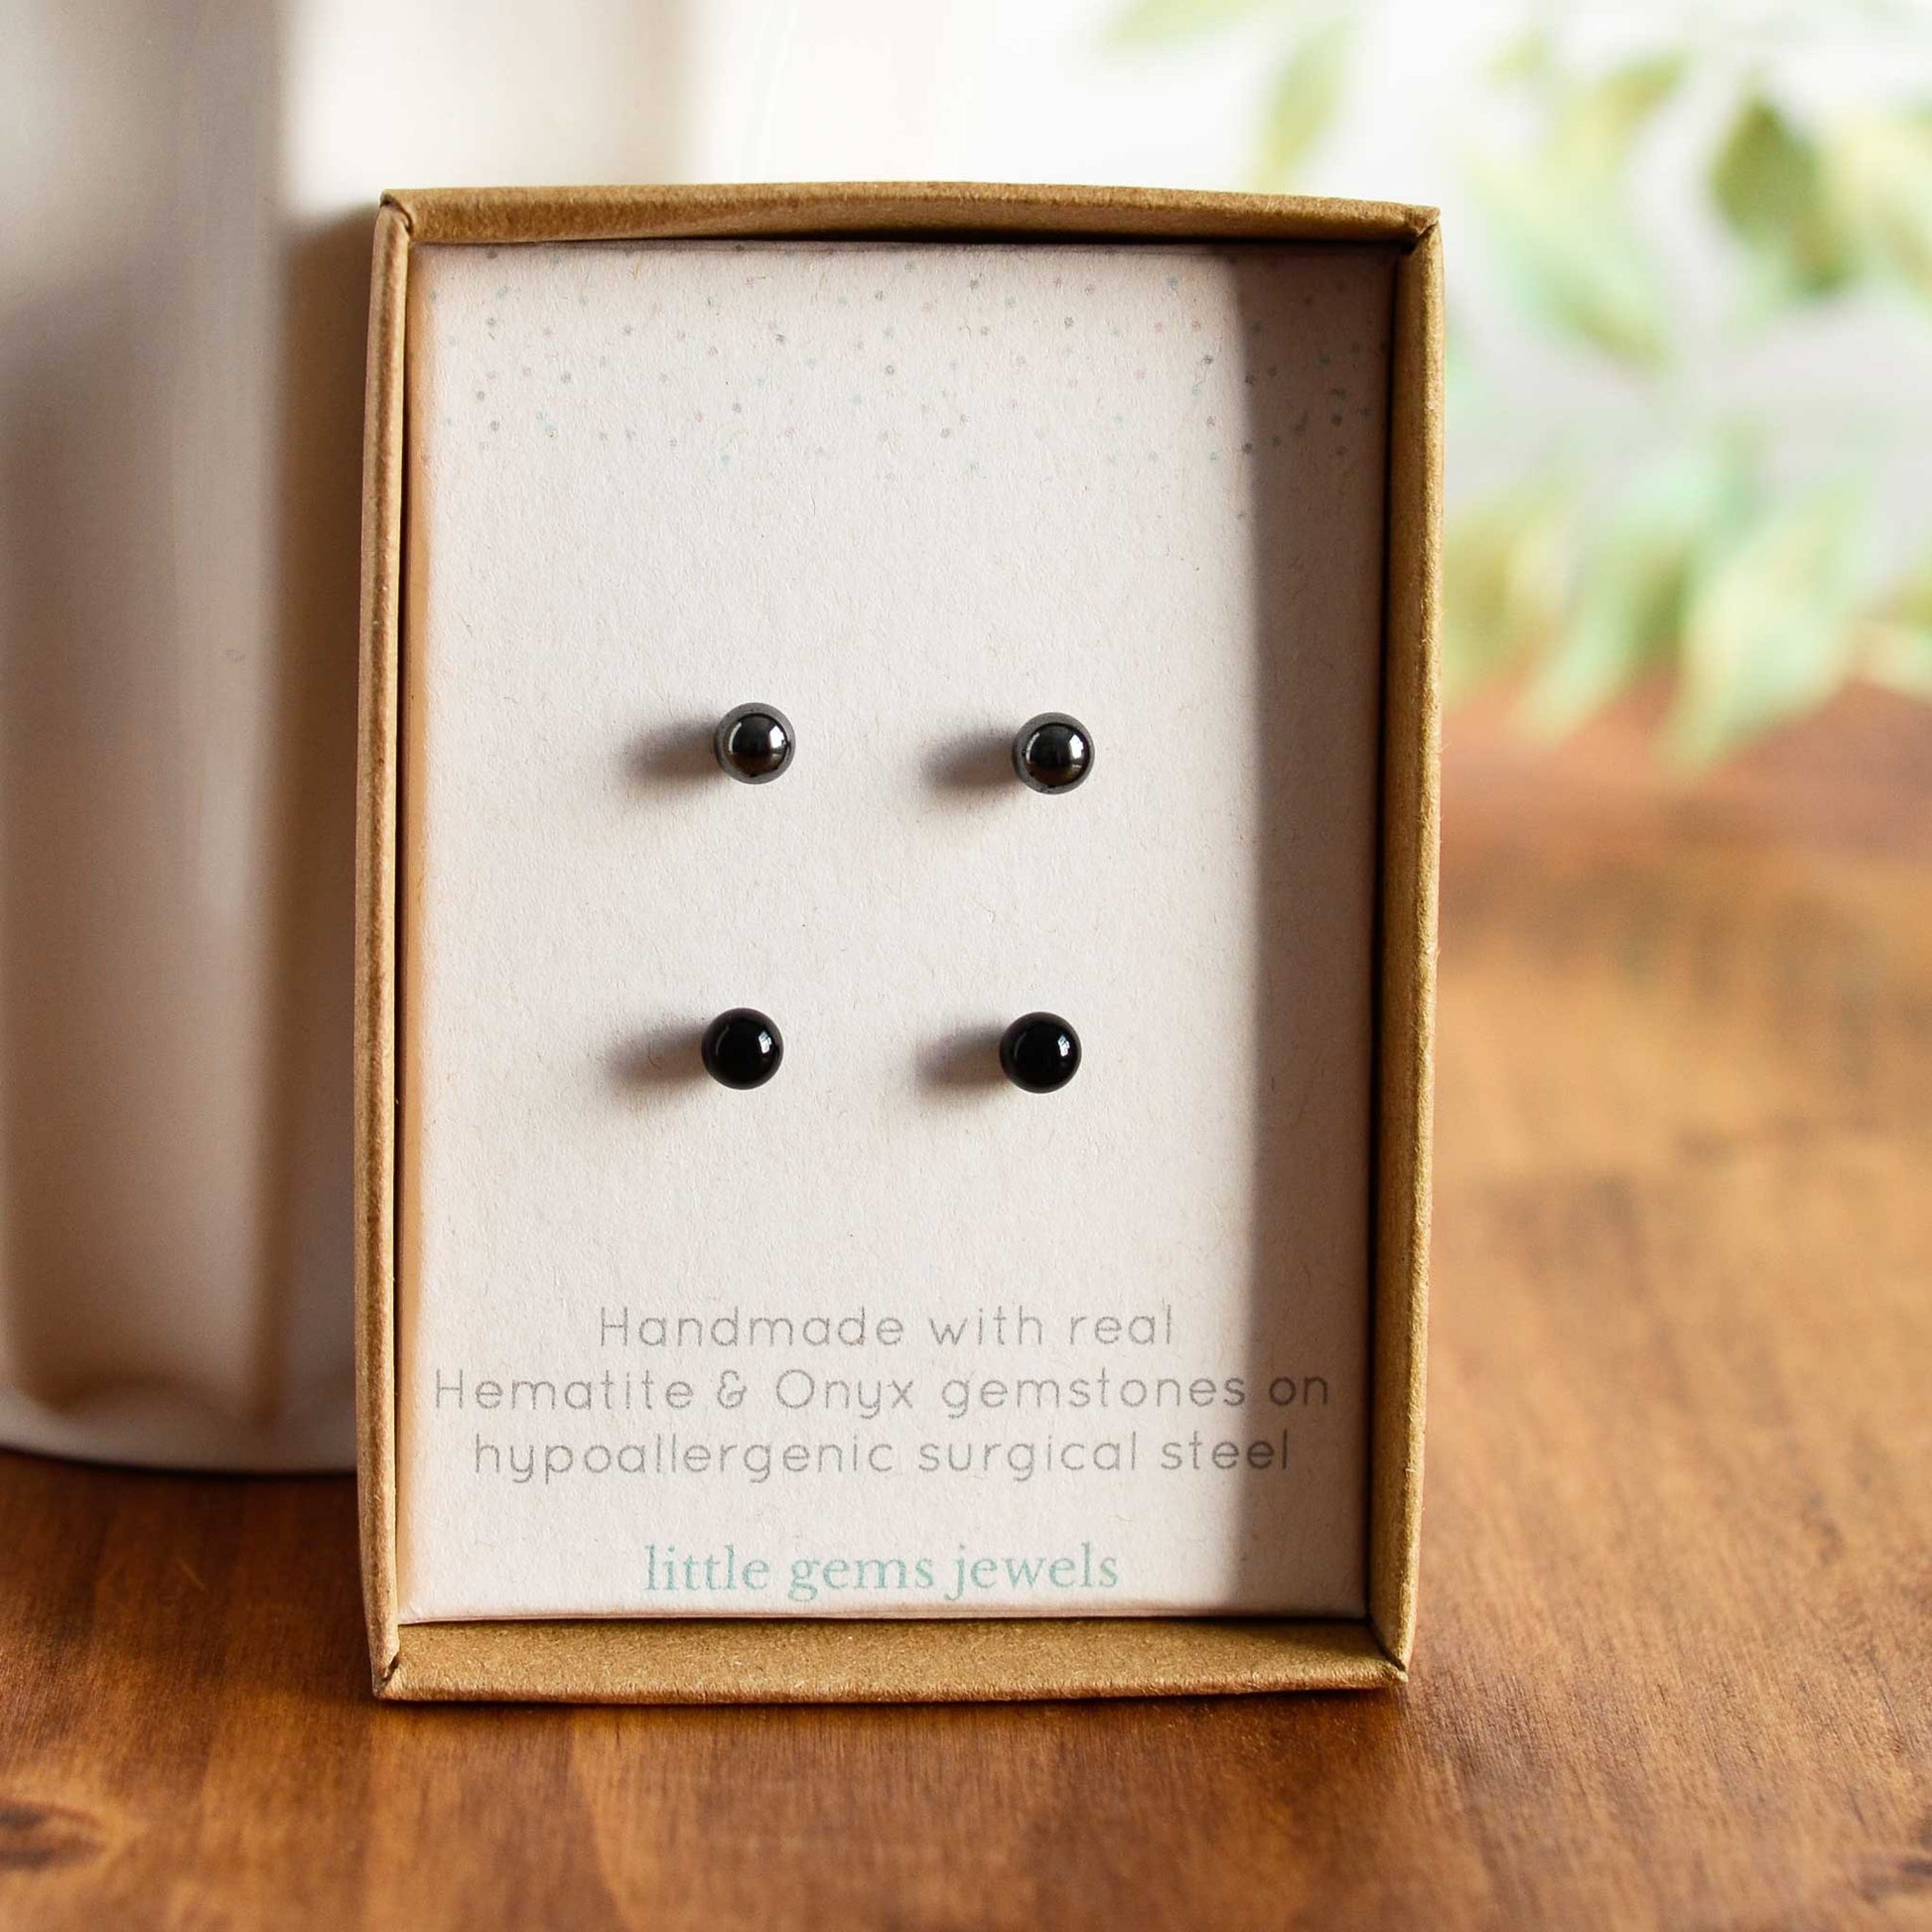 Hematite & Onyx gemstone stud earrings in eco friendly gift box